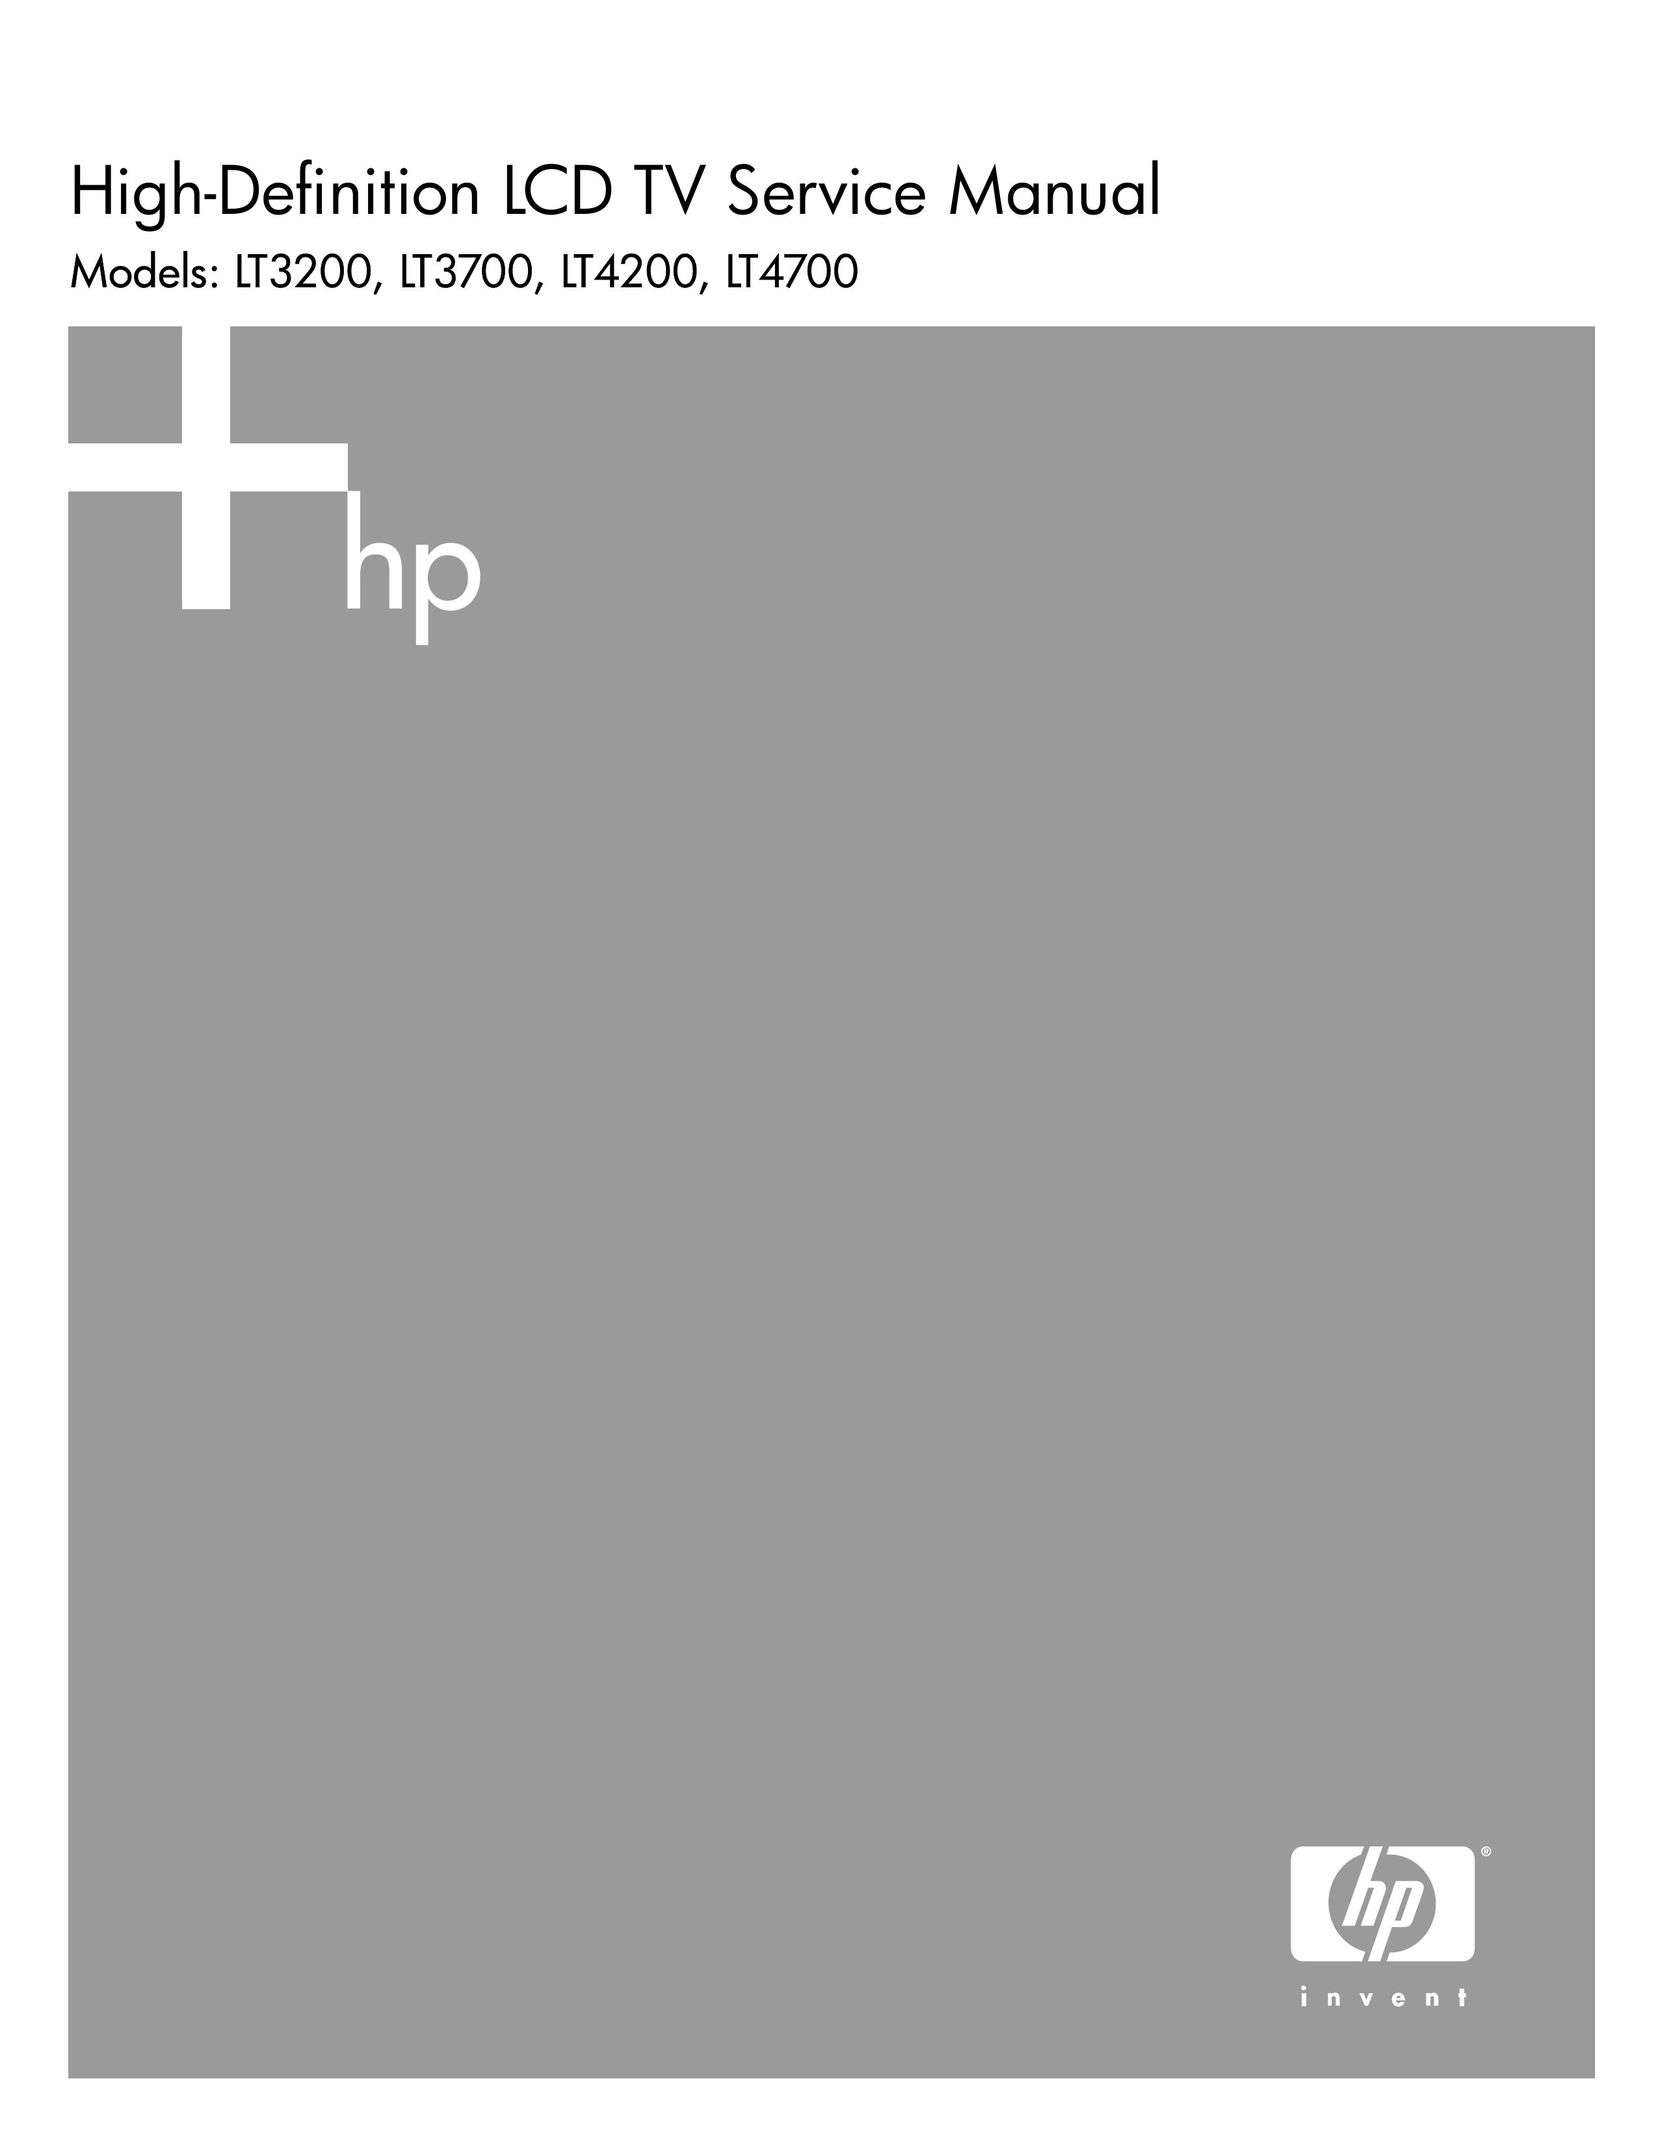 HP (Hewlett-Packard) LT3700 Flat Panel Television User Manual